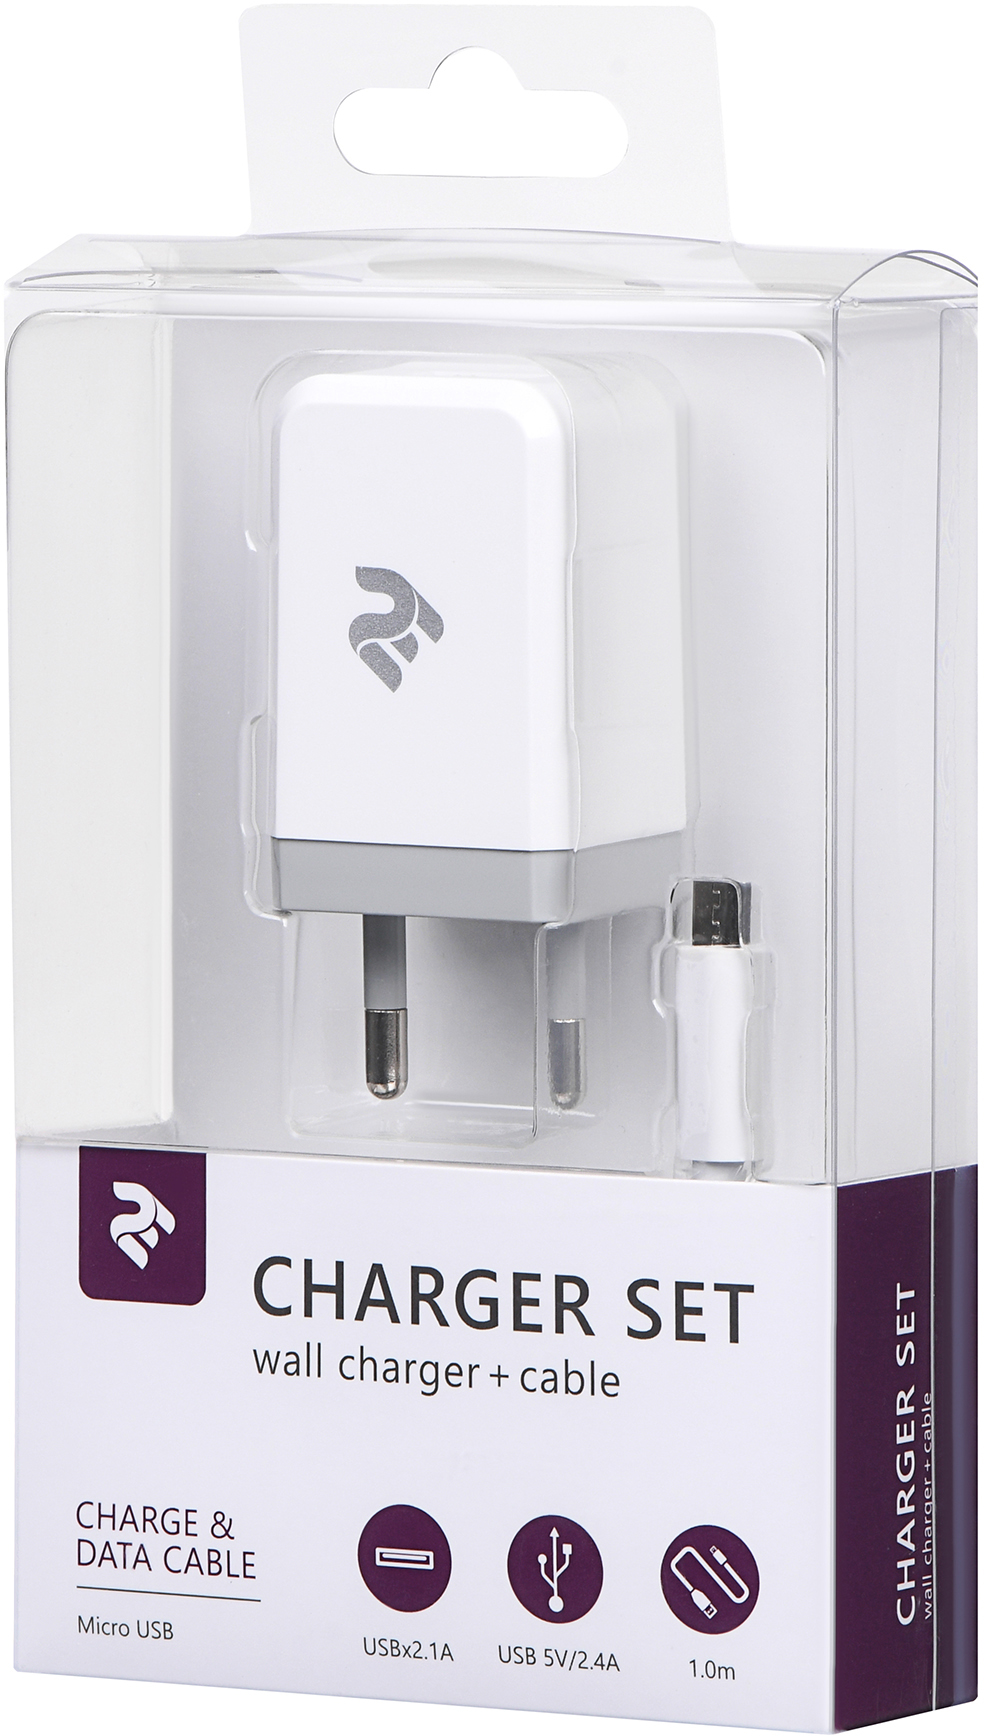 в продаже Зарядное устройство 2E USB Wall Charger+кабель MicroUSB, White (2E-WC1USB2.1A-CM) - фото 3